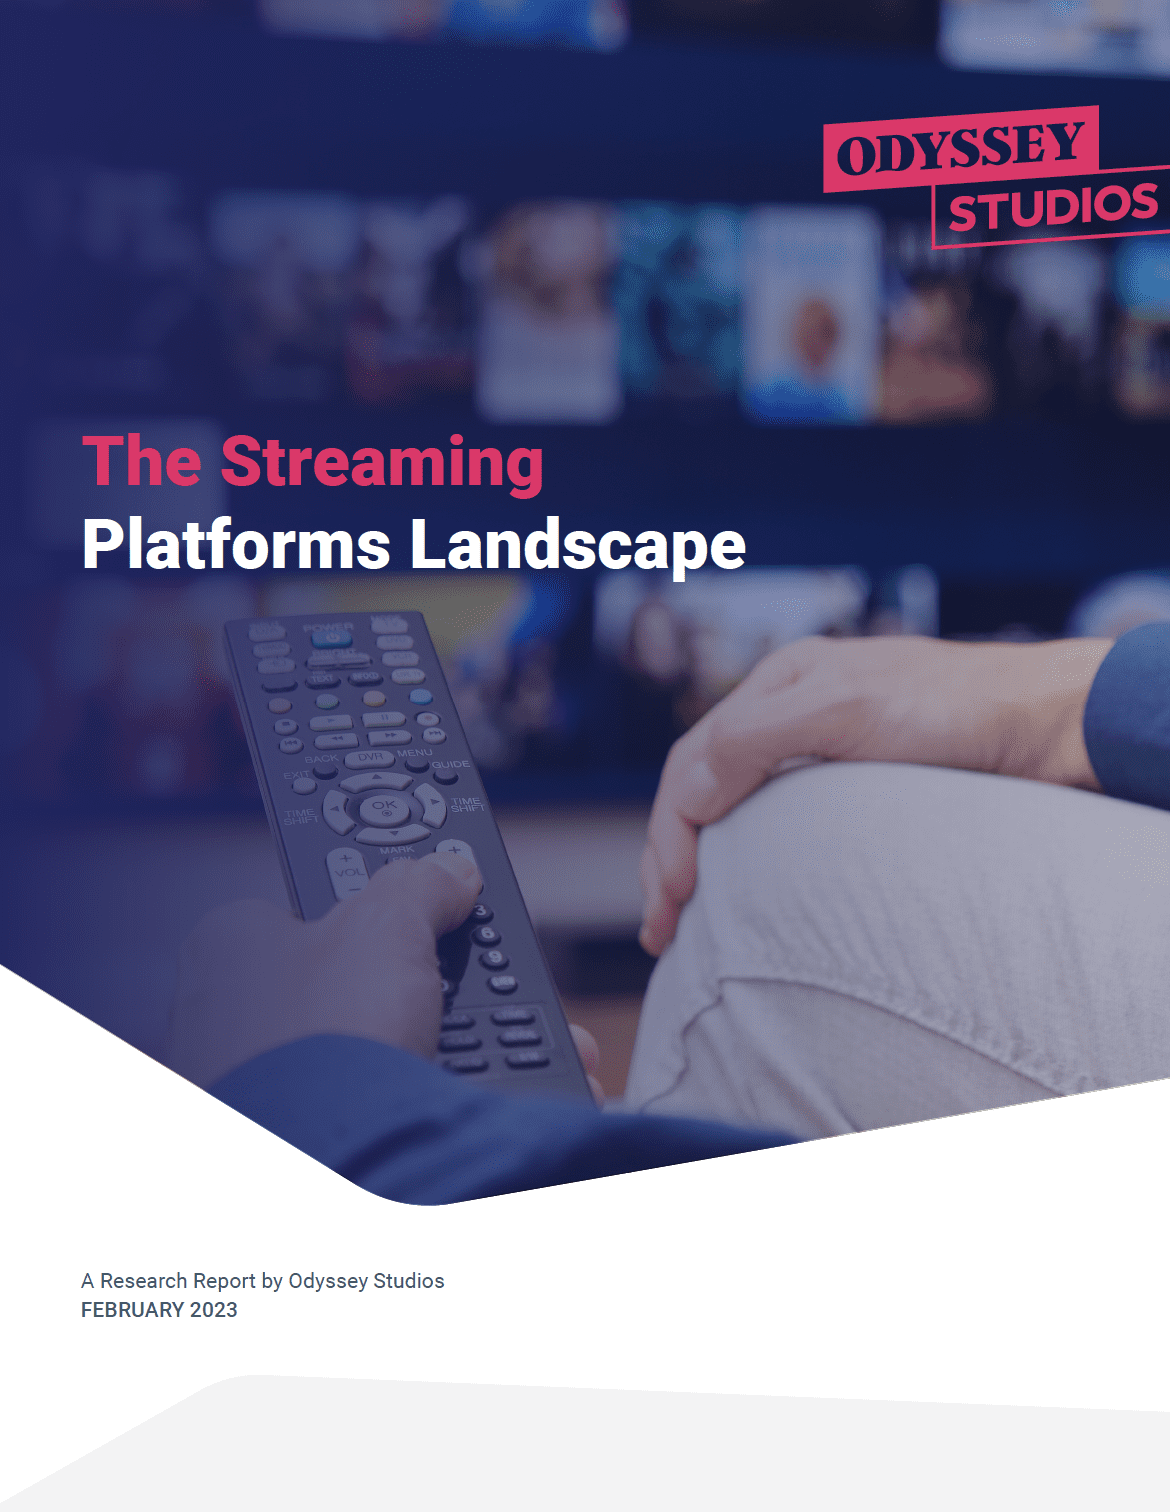 The Streaming Platforms Landscape by Odyssey Studios